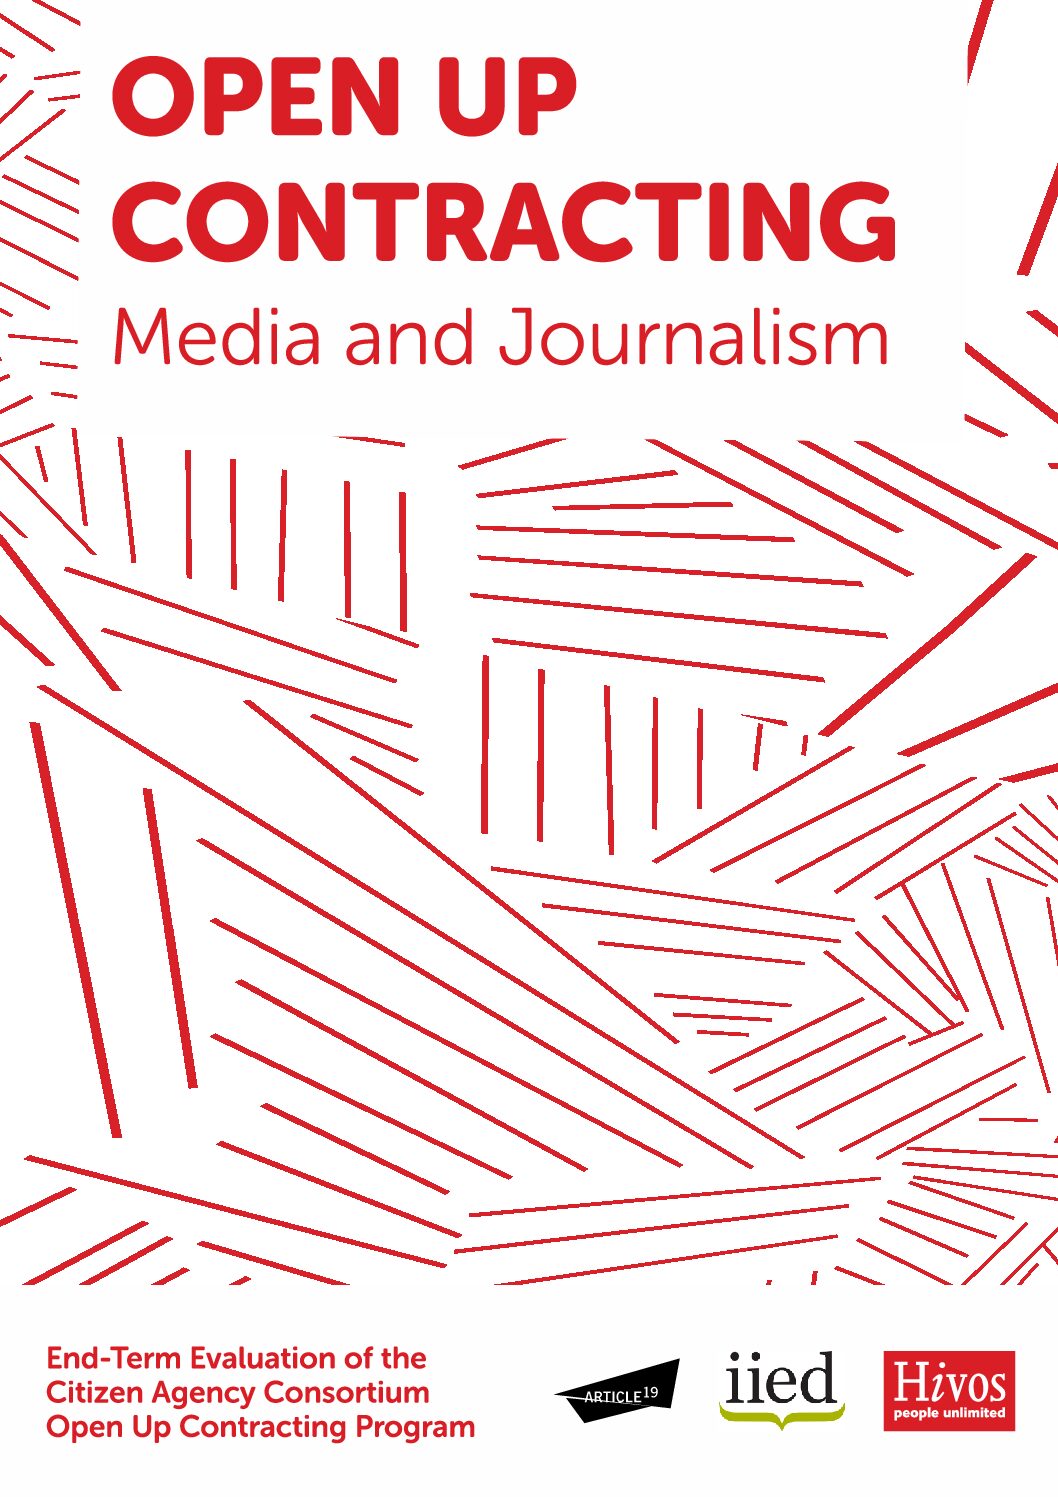 Evalution of program: Media and journalism case study